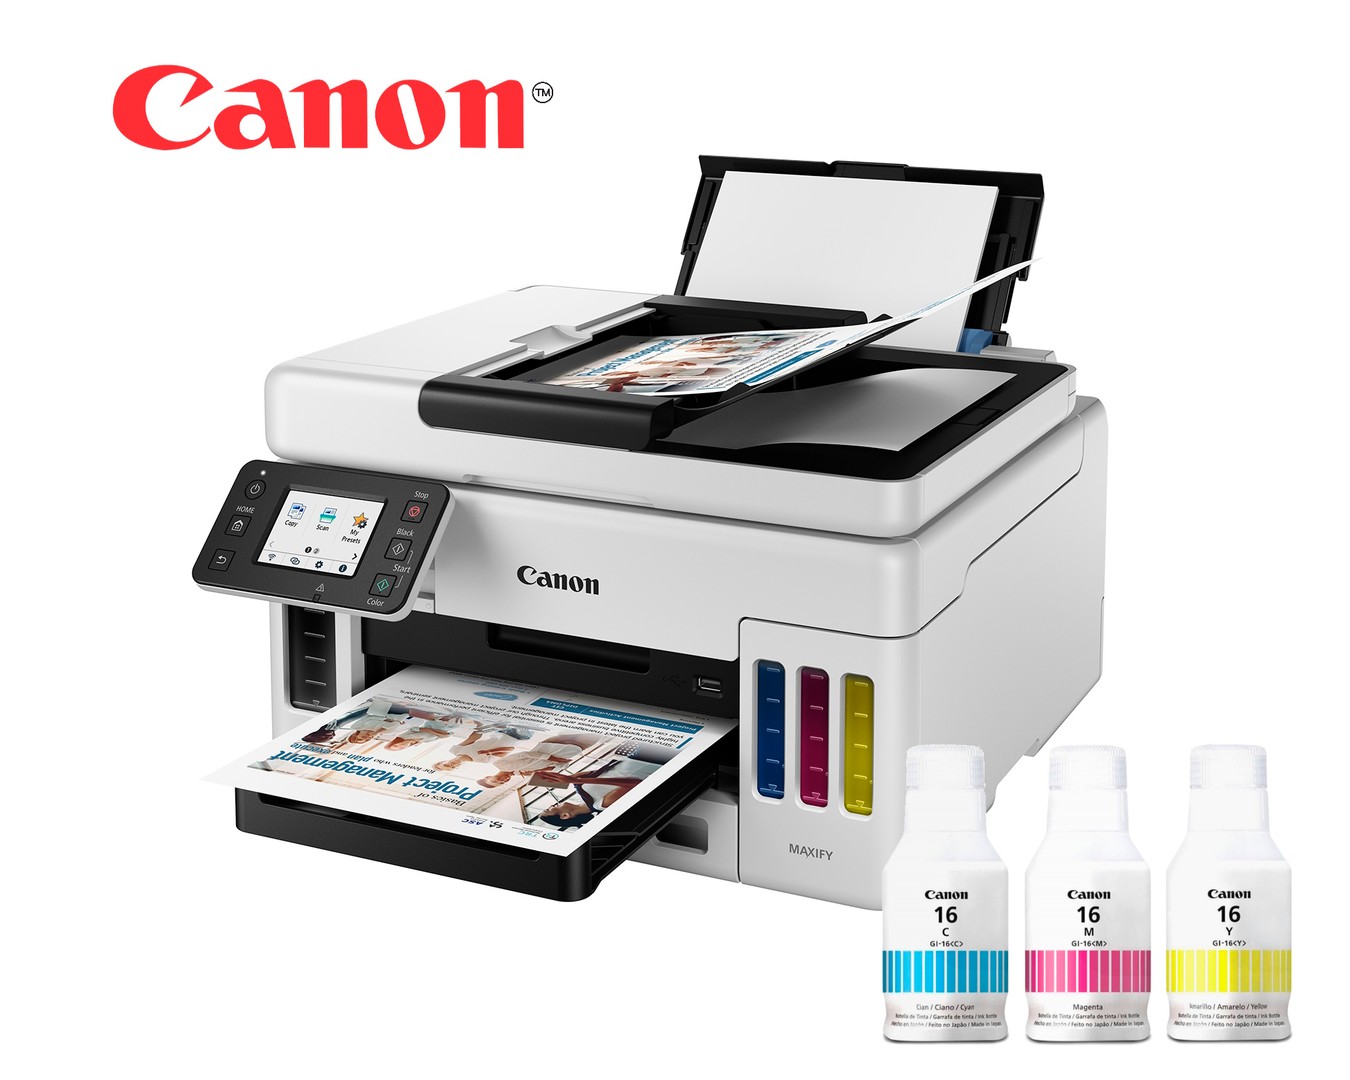 impresoras y scanners - IMPRESORA CANON GX6010 MAXIFY MEGA TANK MULTIFUNCIONAL.